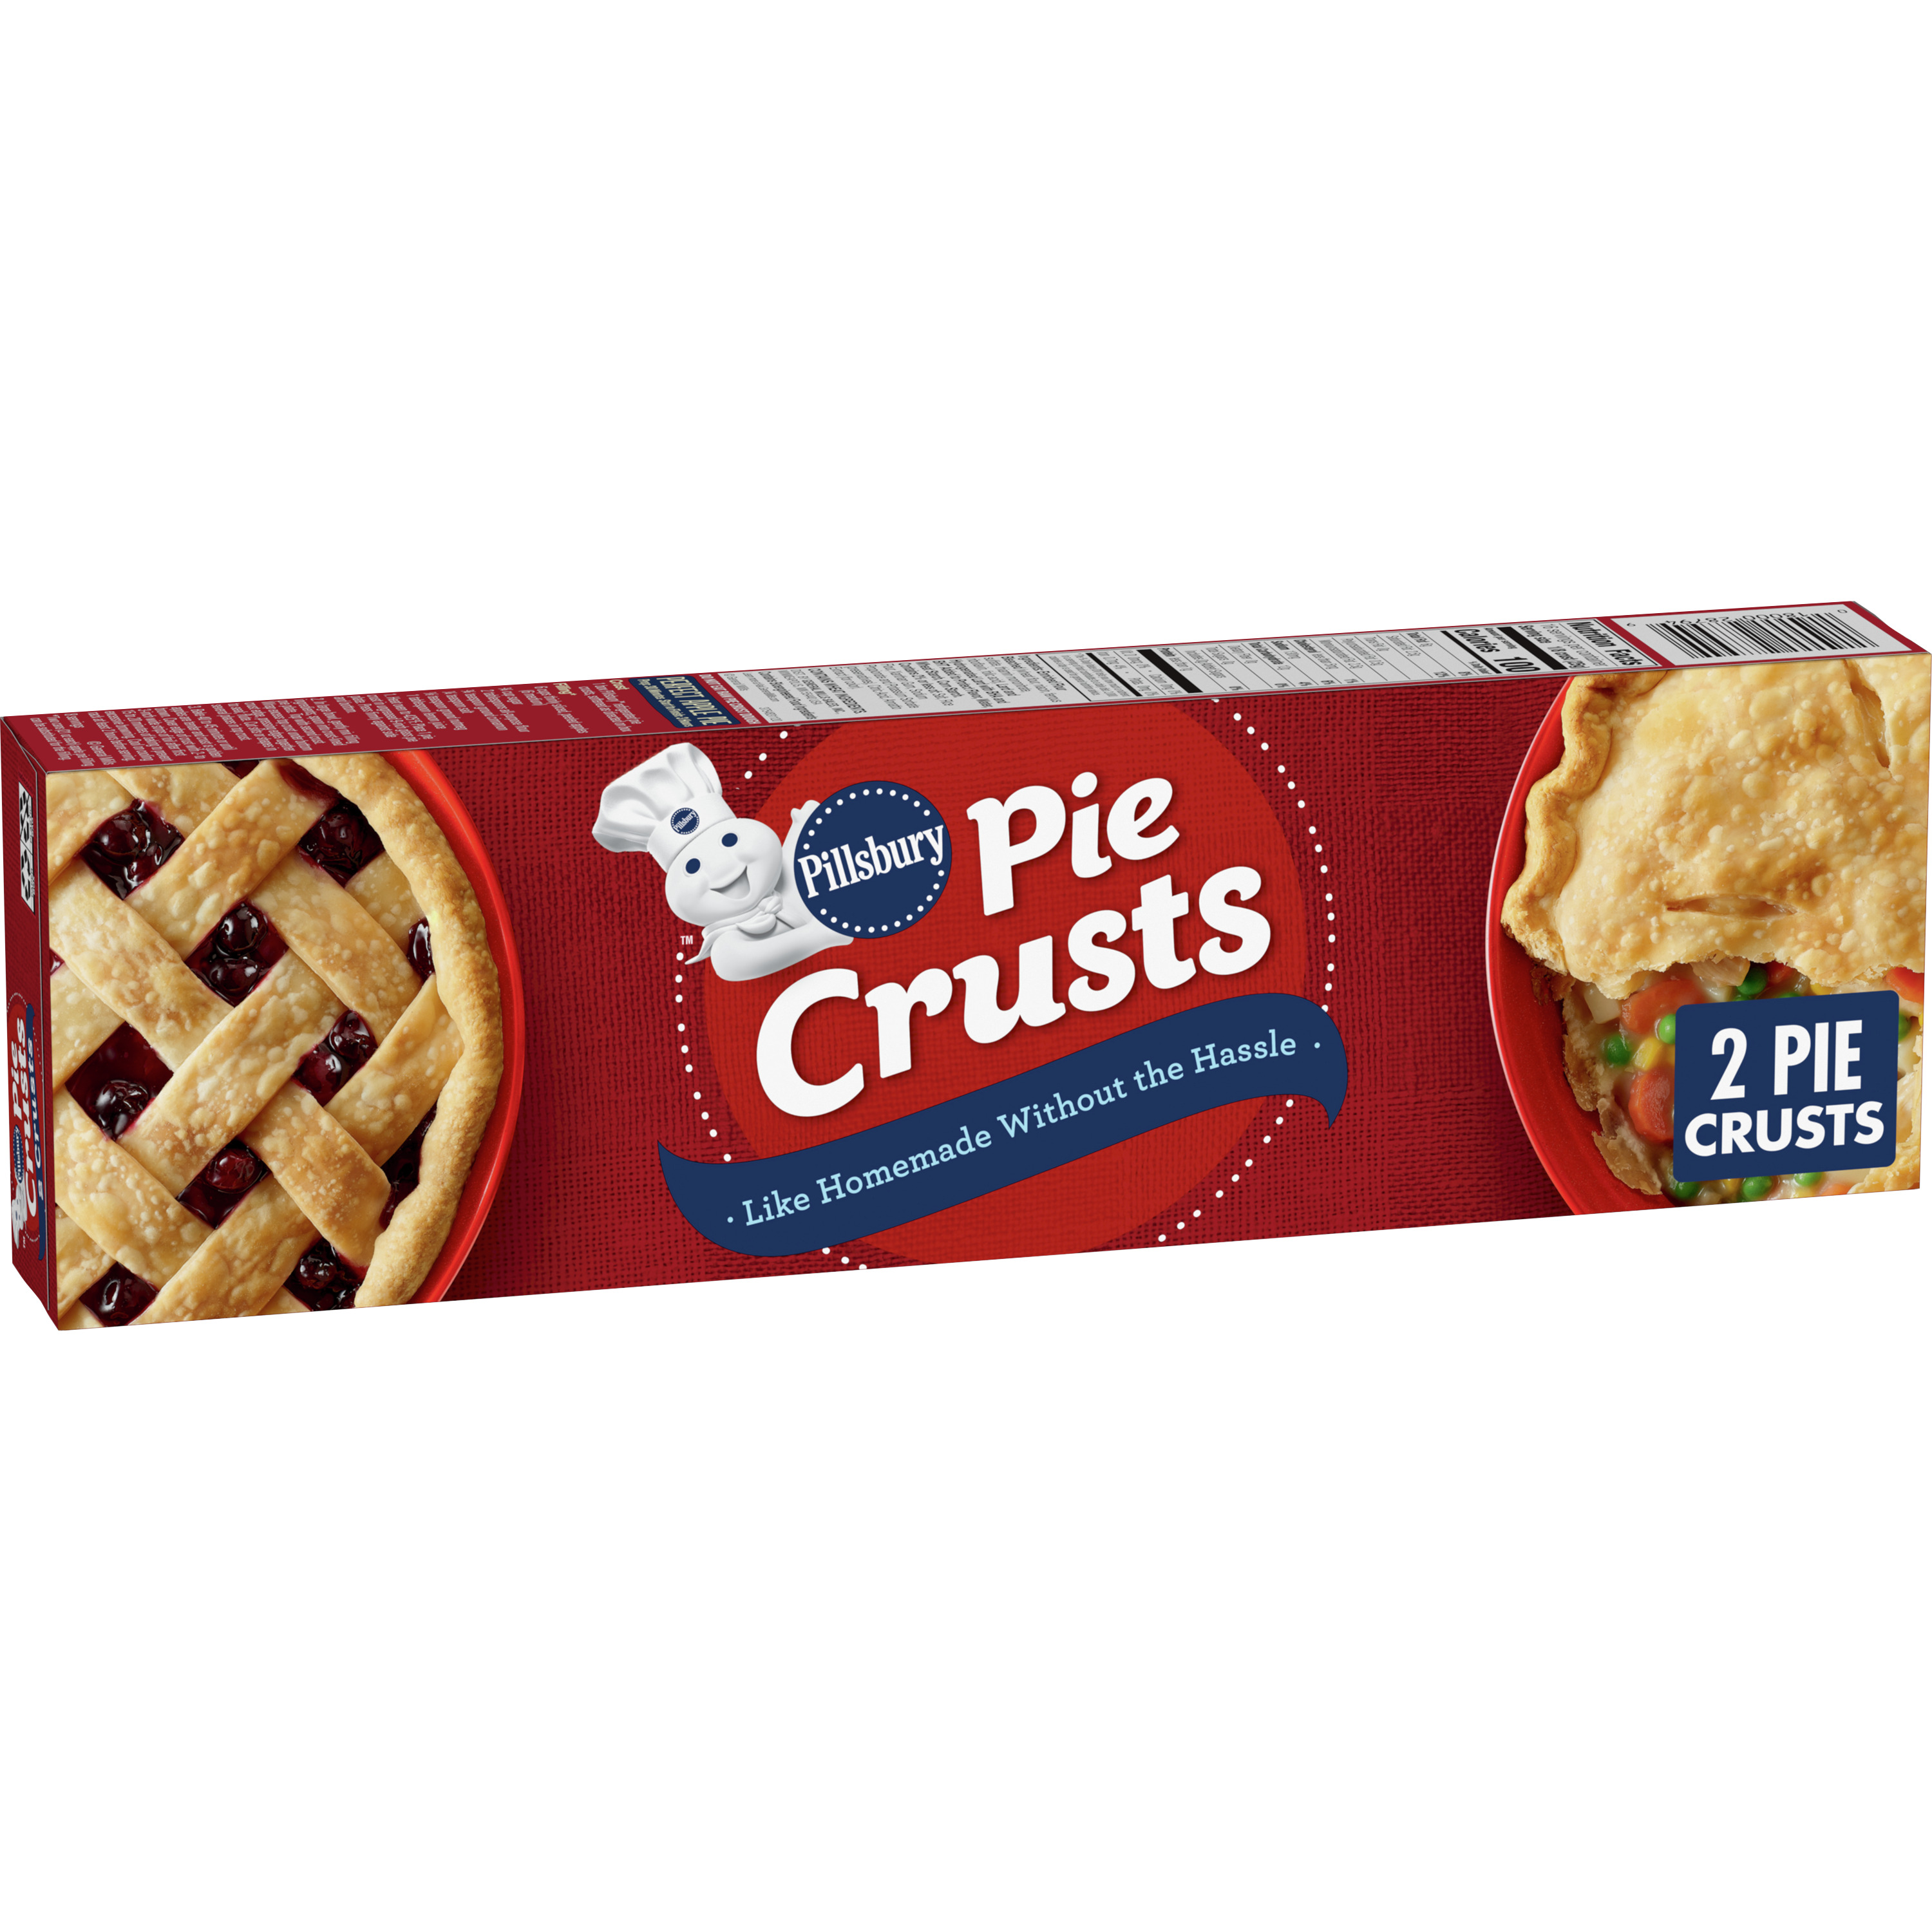 Pillsbury Premade Refrigerated Pie Crust, Two Pie Crusts, 14.1 oz - image 1 of 10